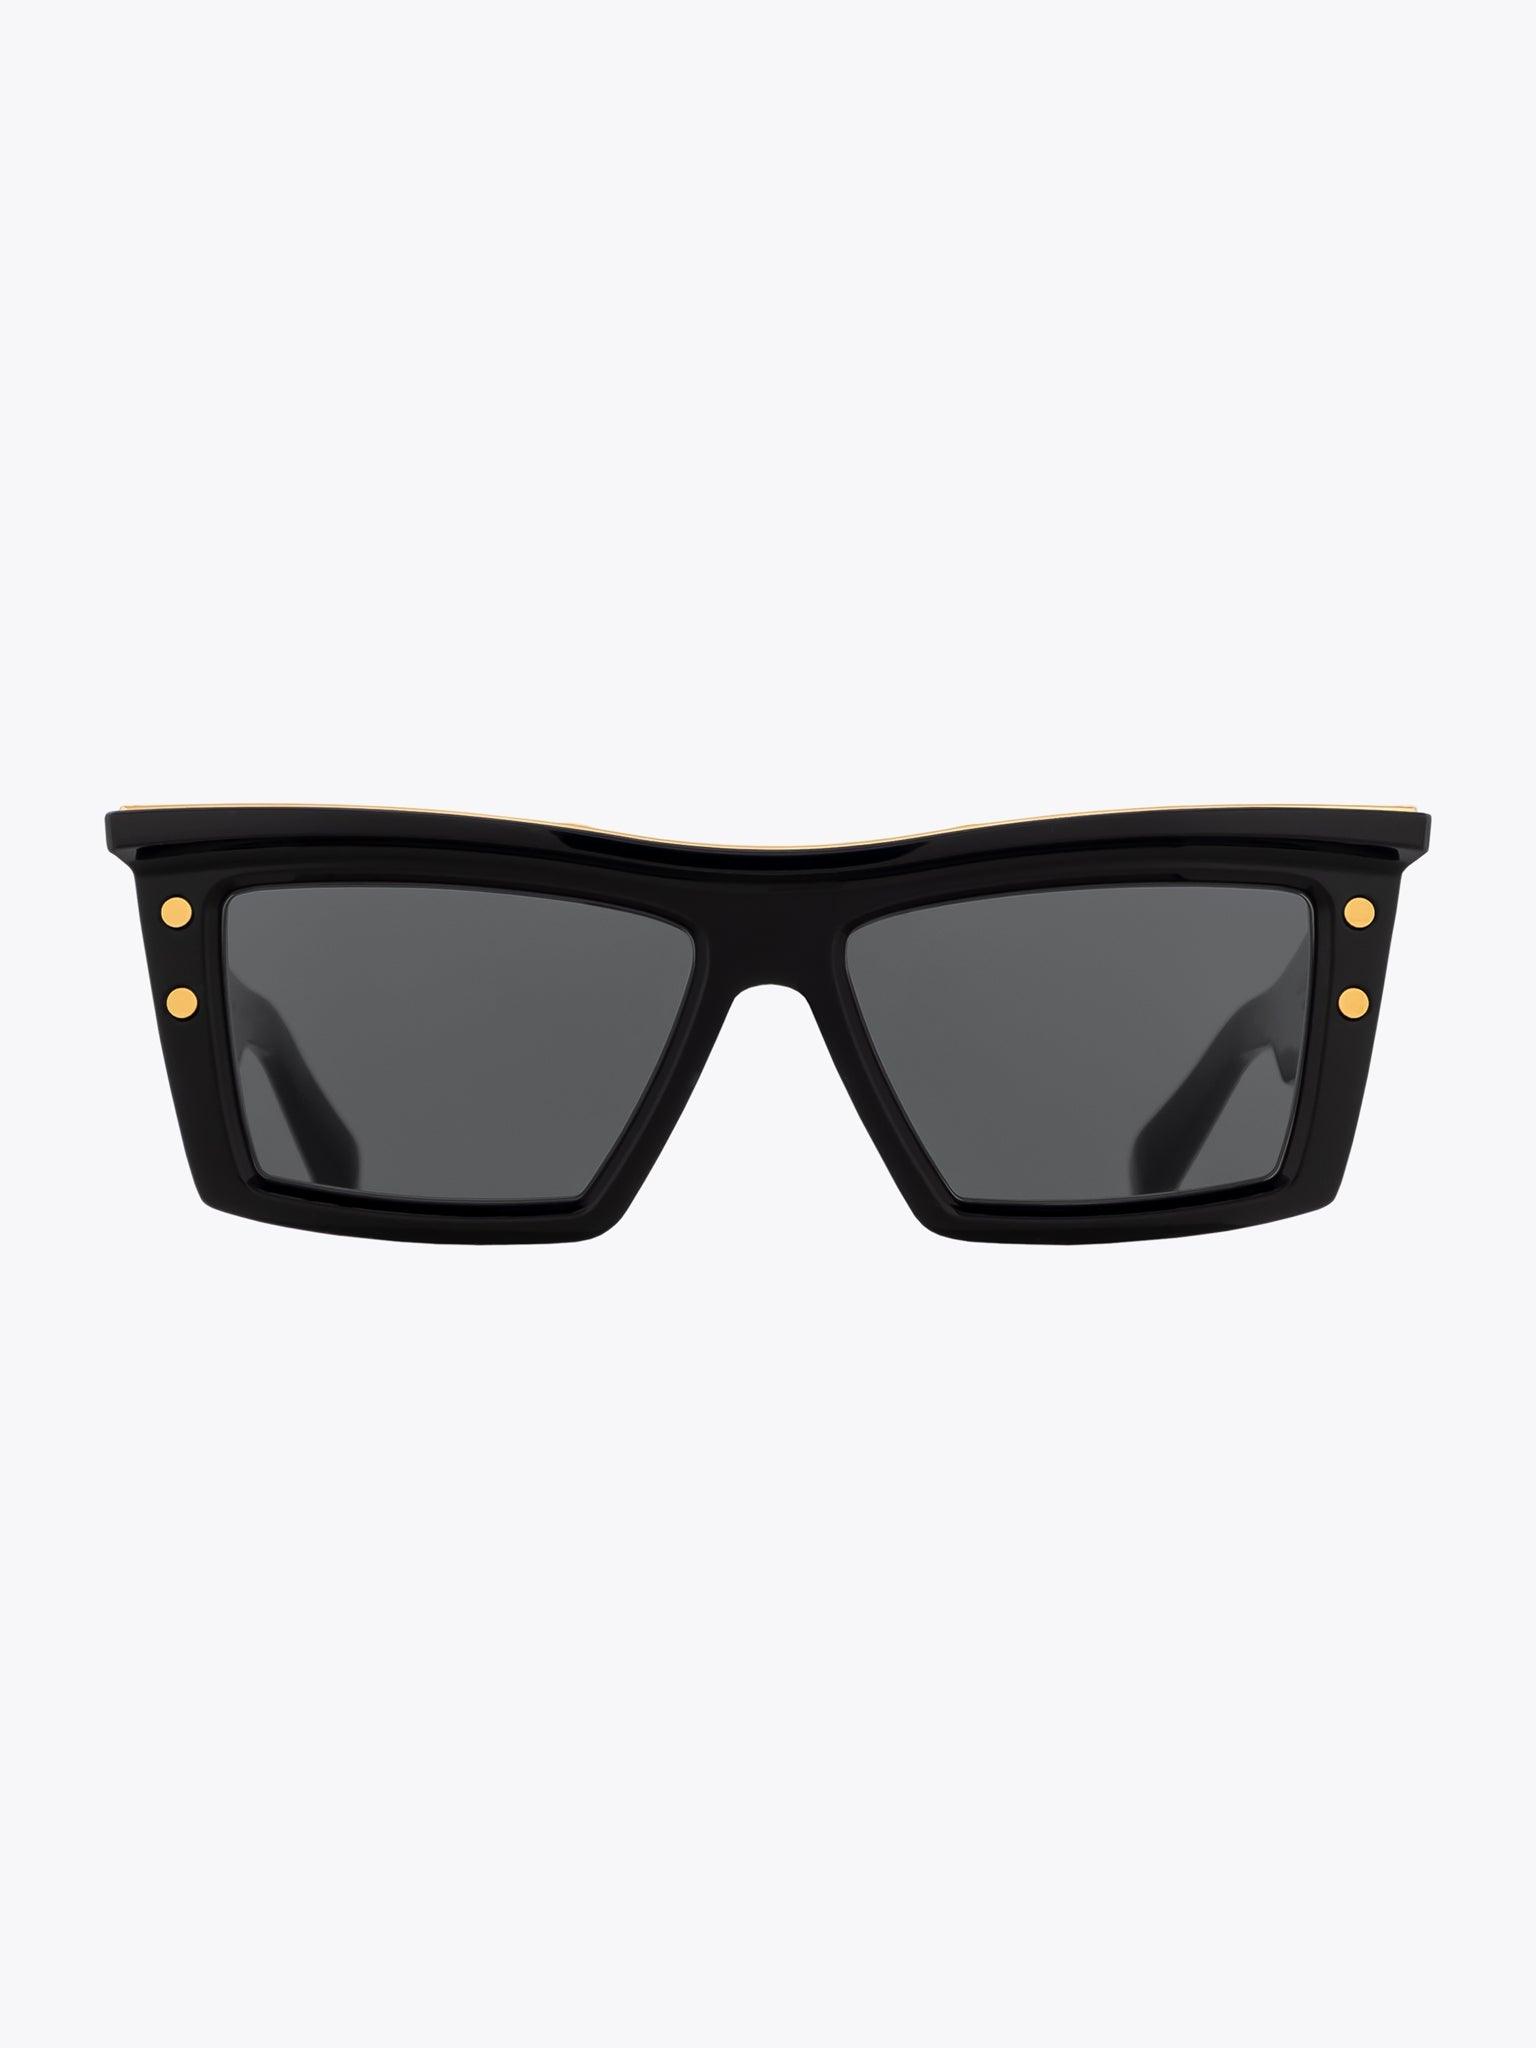 BALMAIN B-VII Black Sunglasses